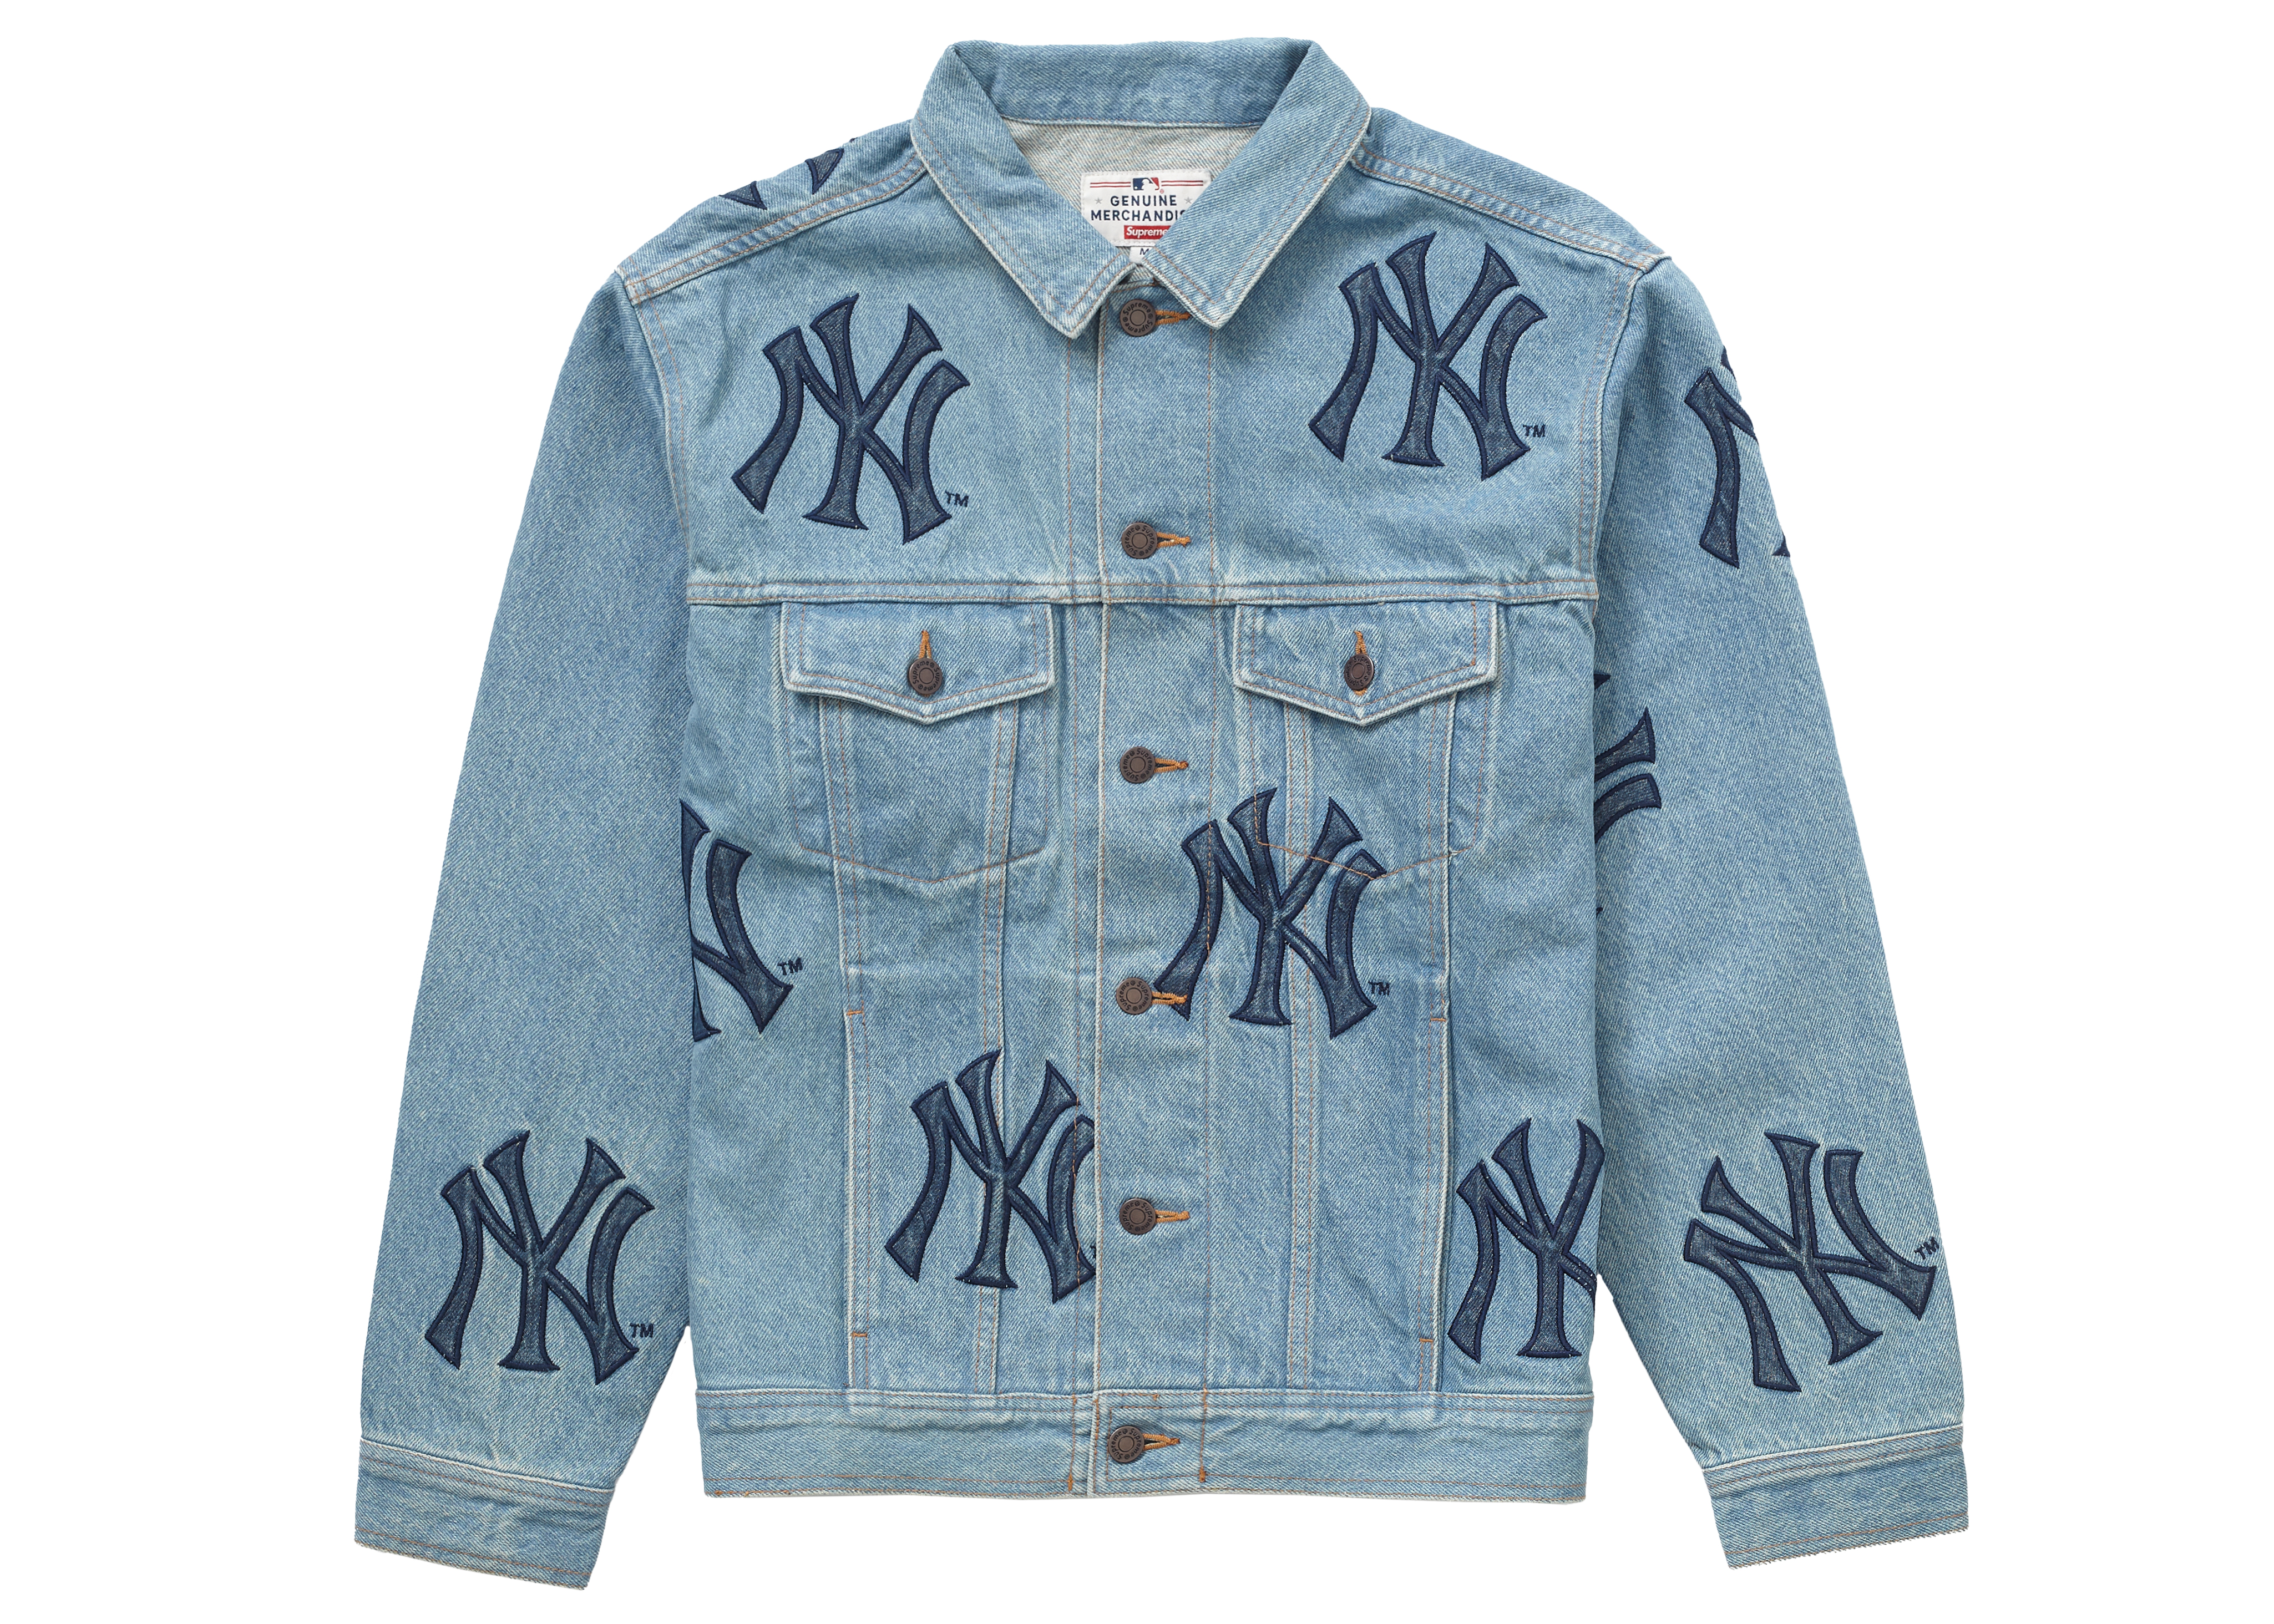 Supreme x New York Yankees Denim Trucker Jacket Washed Blue - FW21 ...